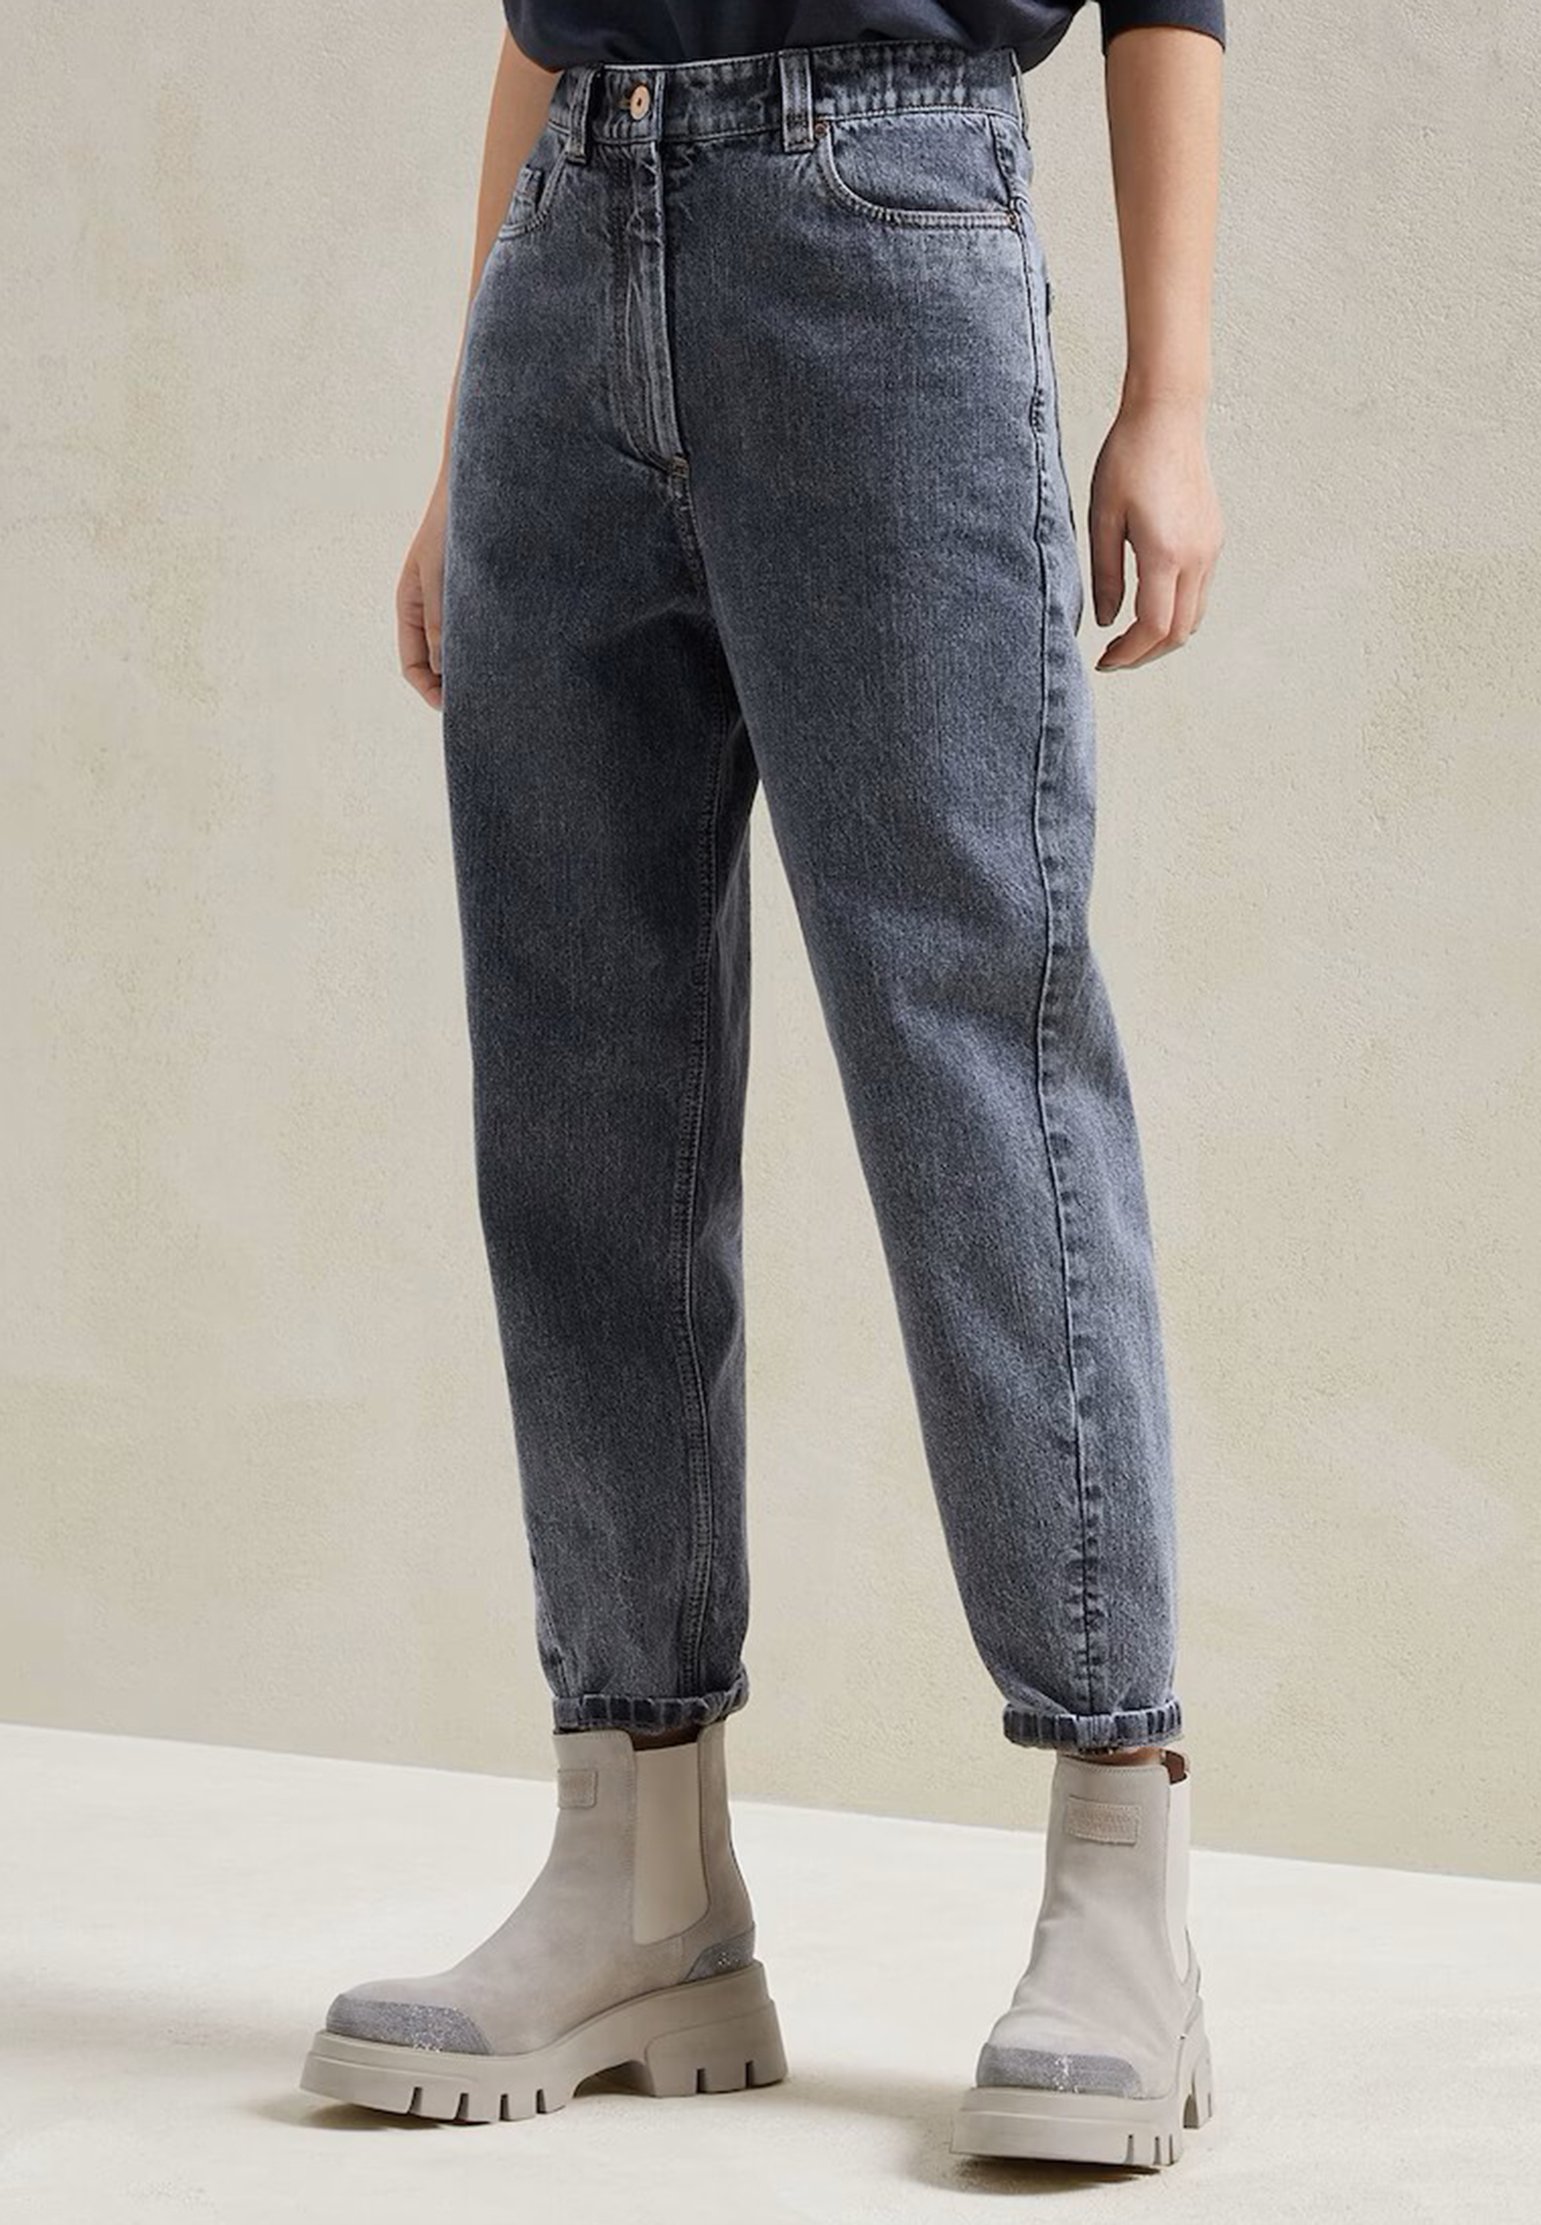 Jeans BRUNELLO CUCINELLI Color: blue (Code: 175) in online store Allure